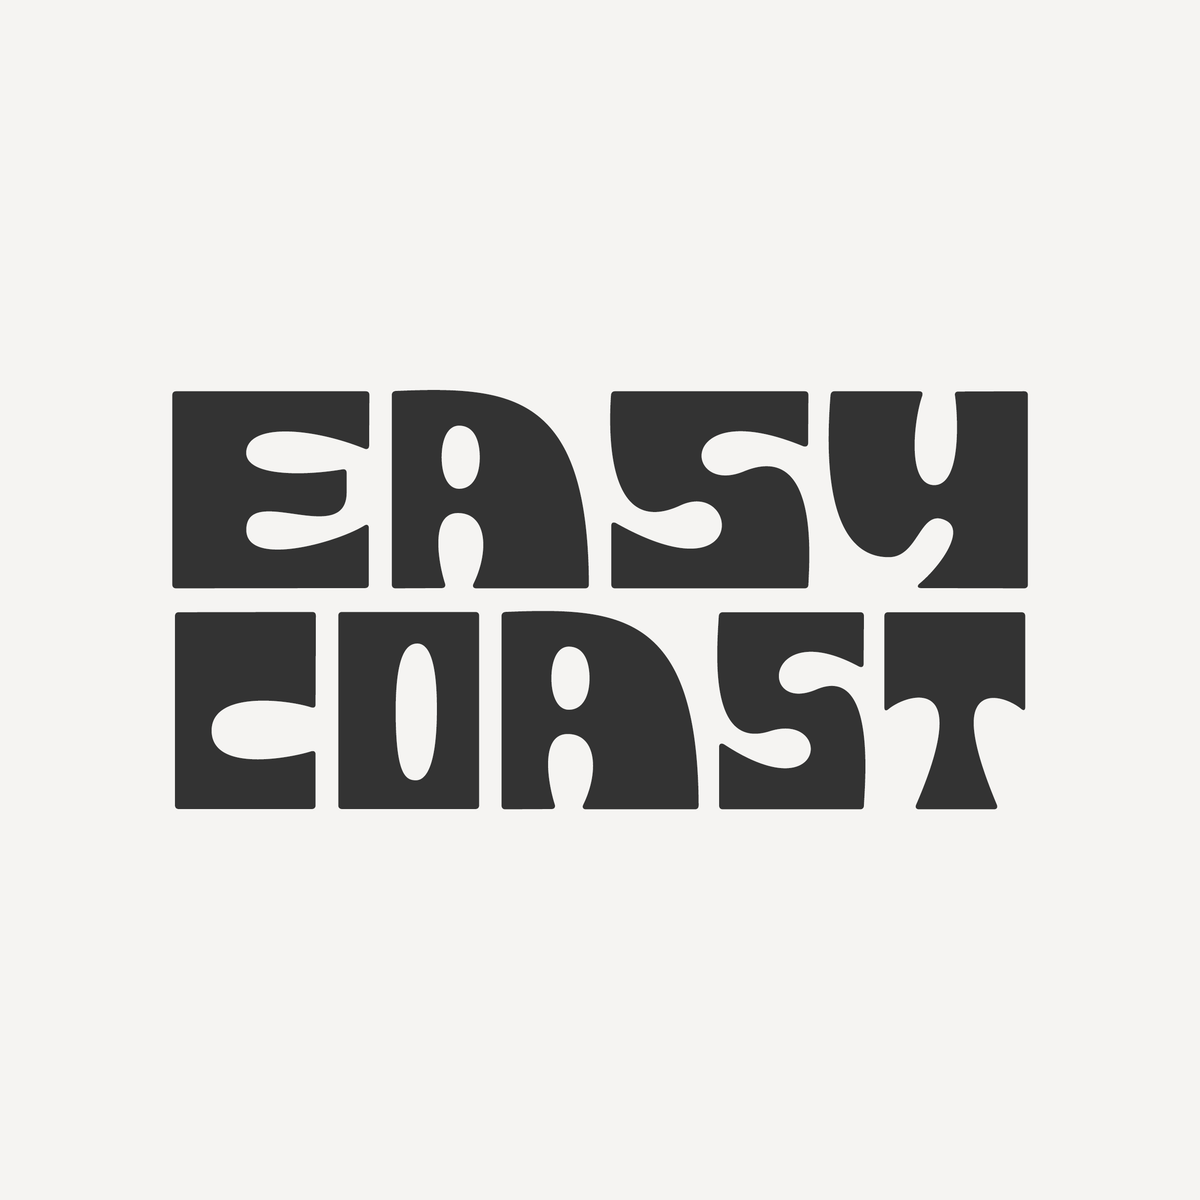 Easy Coast